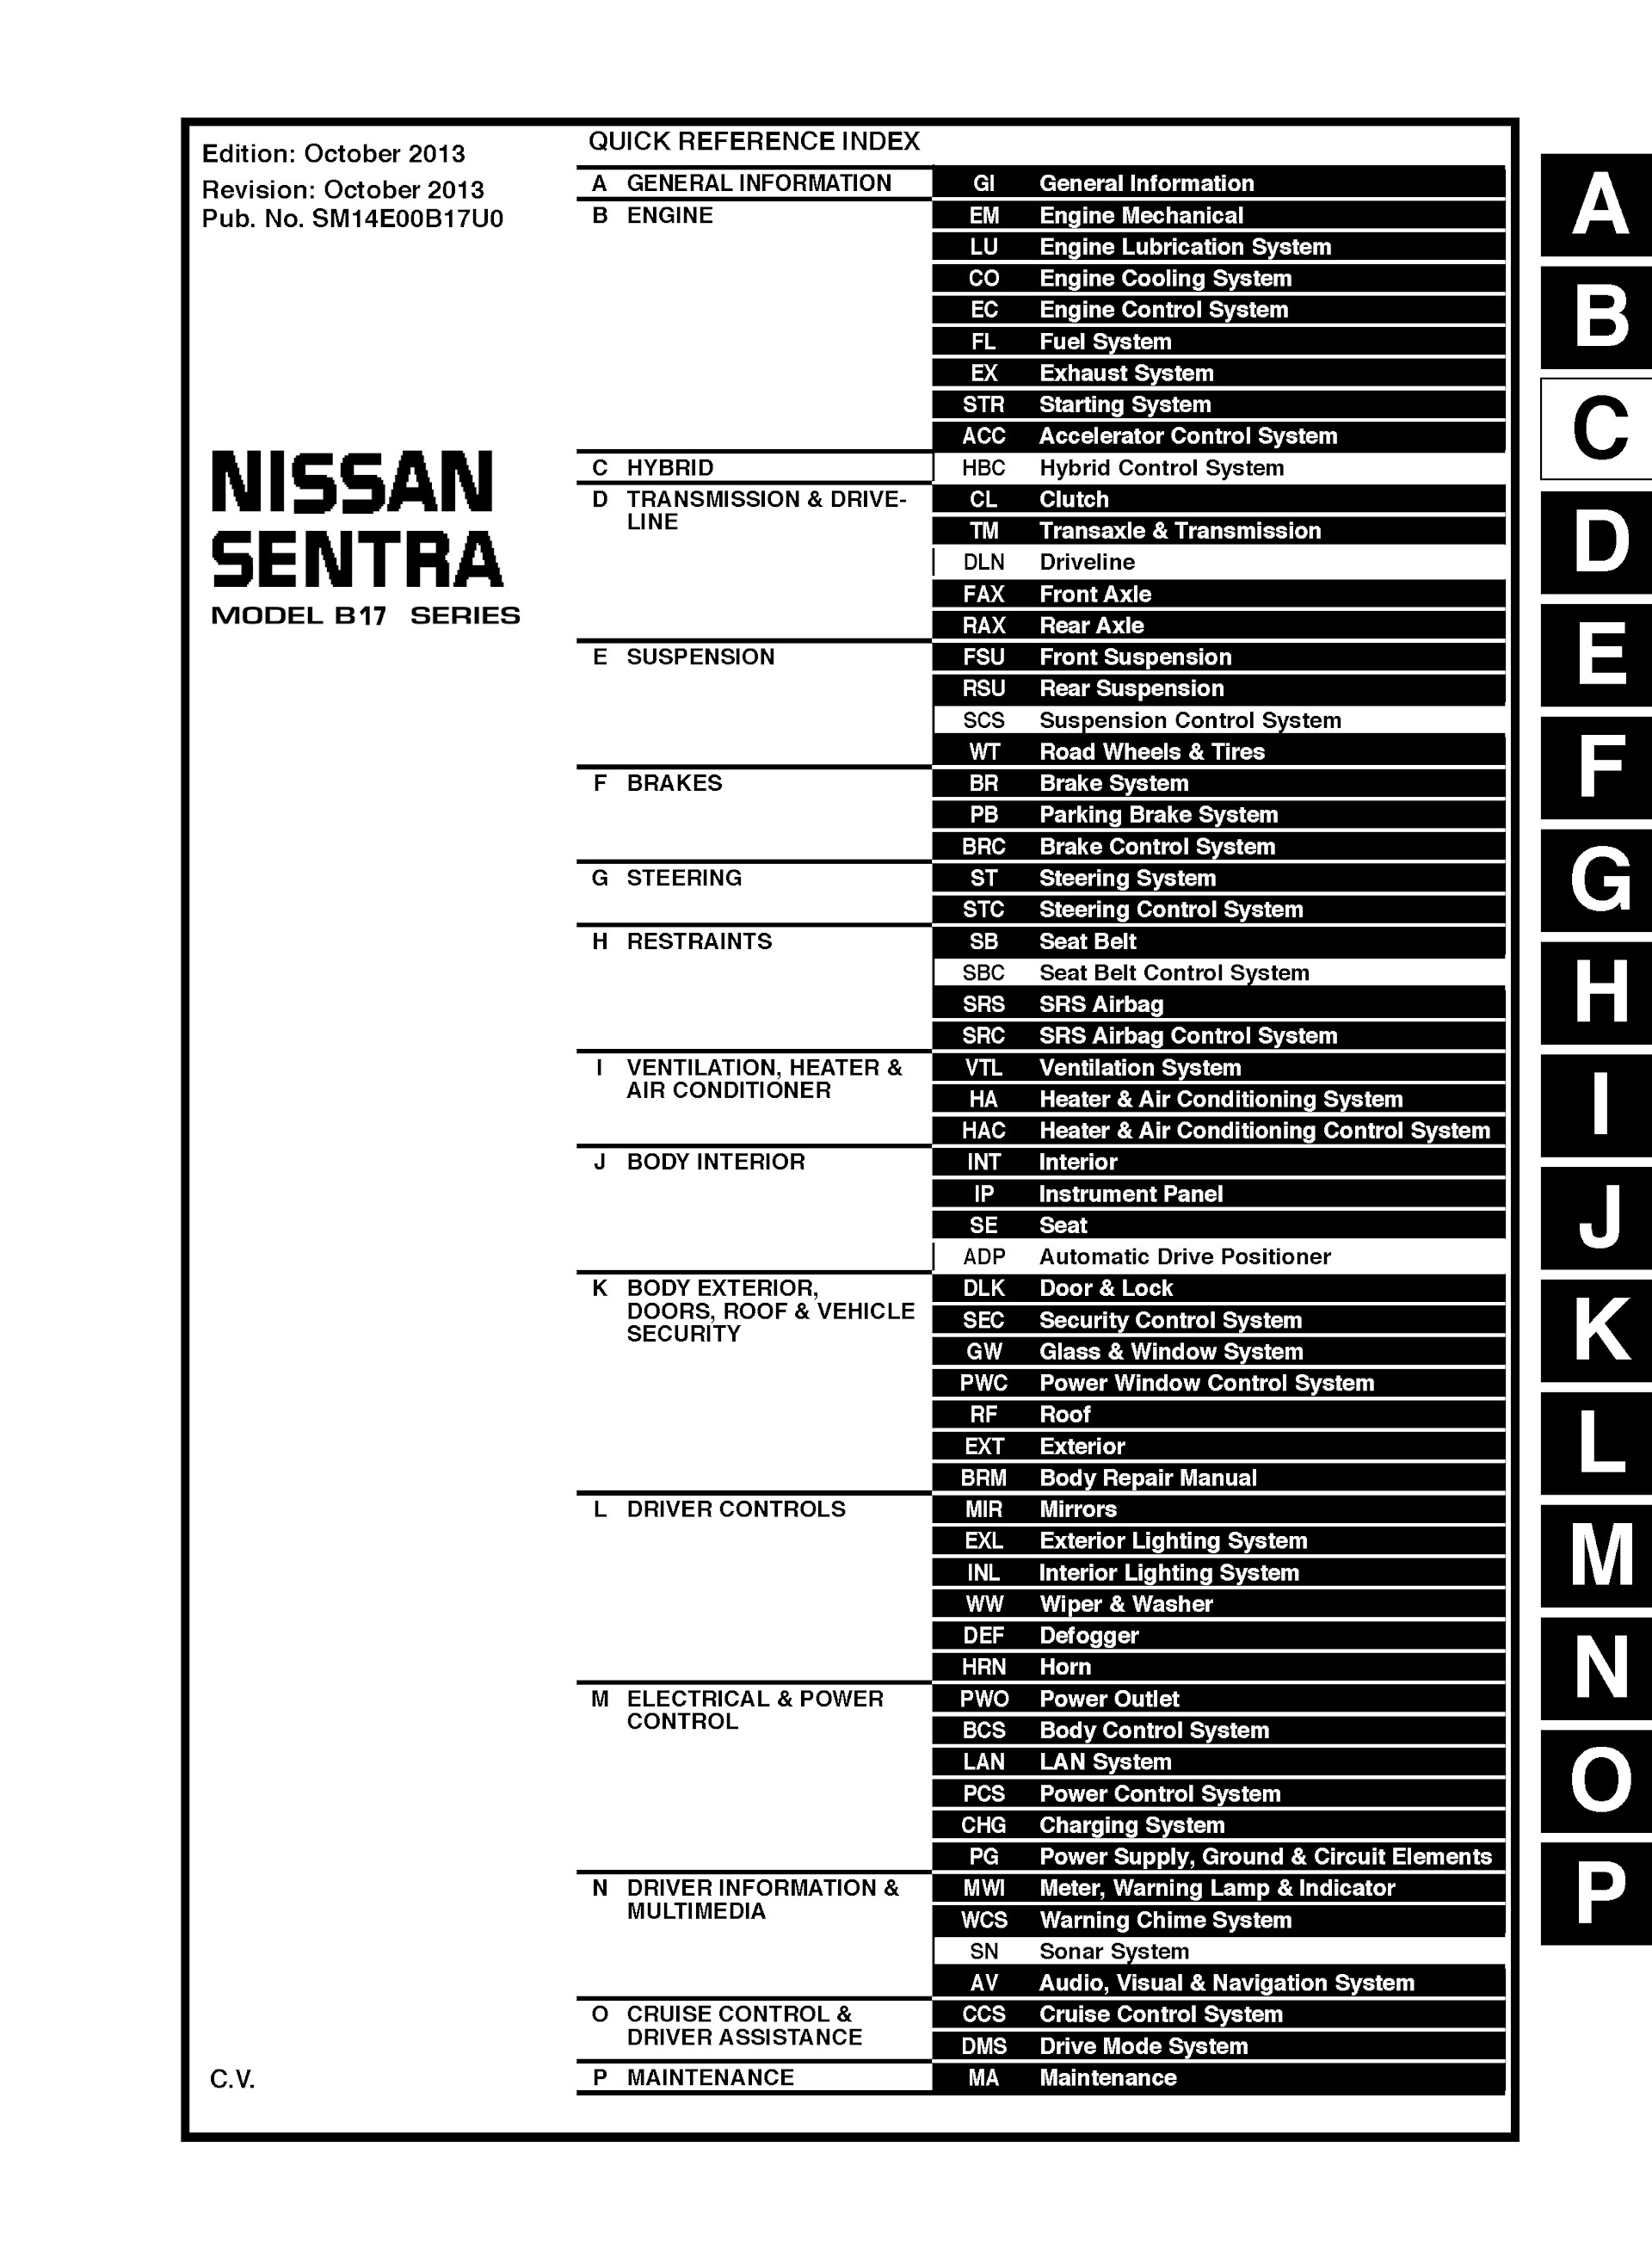 Table of Contents 2014 Nissan Sentra Repair Manual